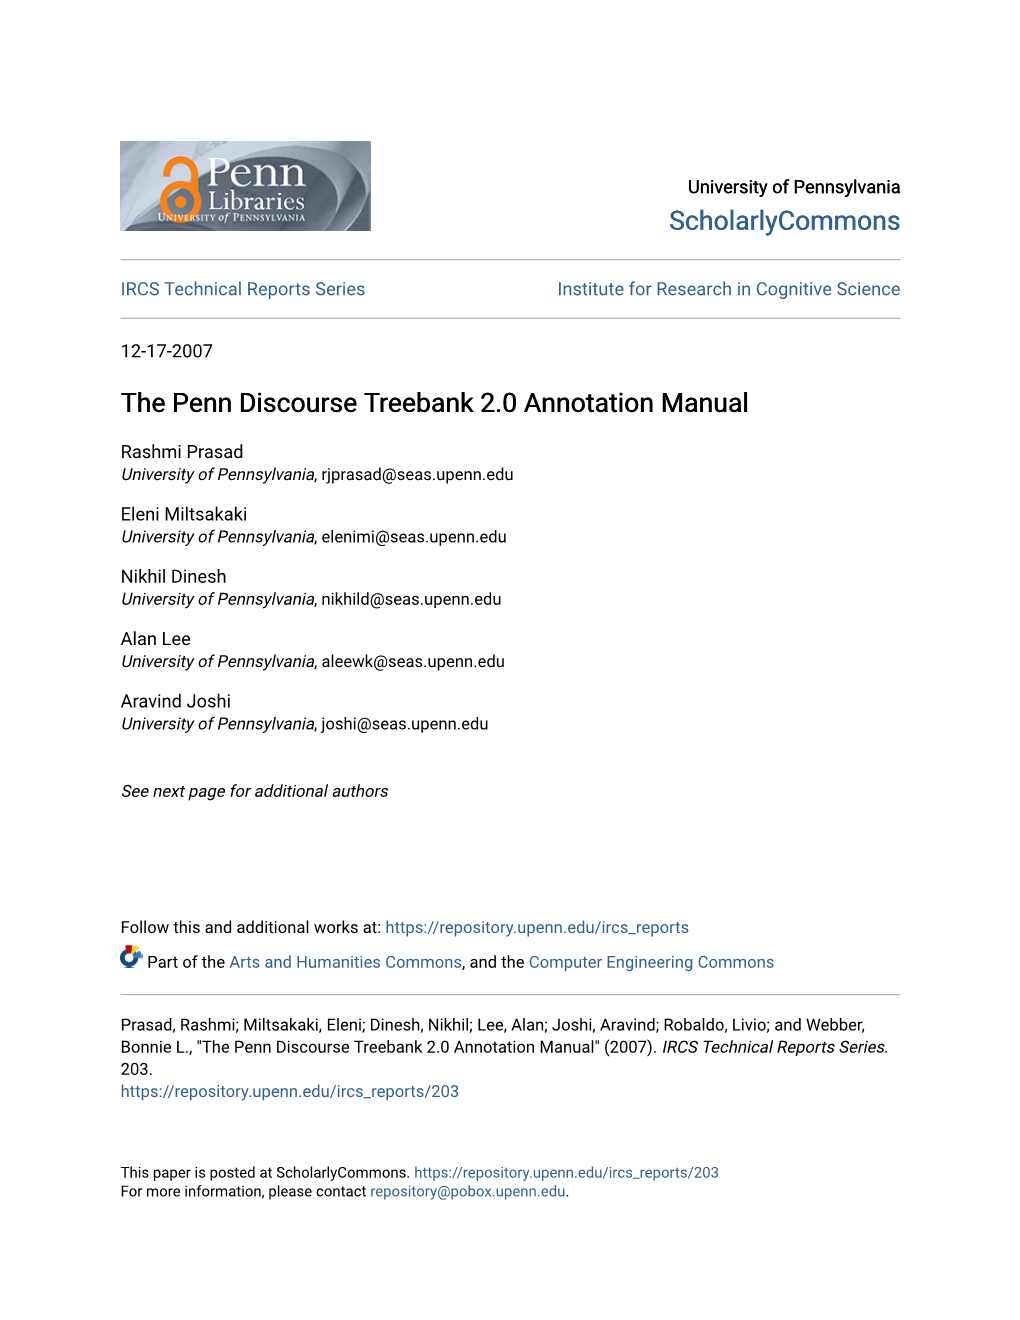 The Penn Discourse Treebank 2.0 Annotation Manual